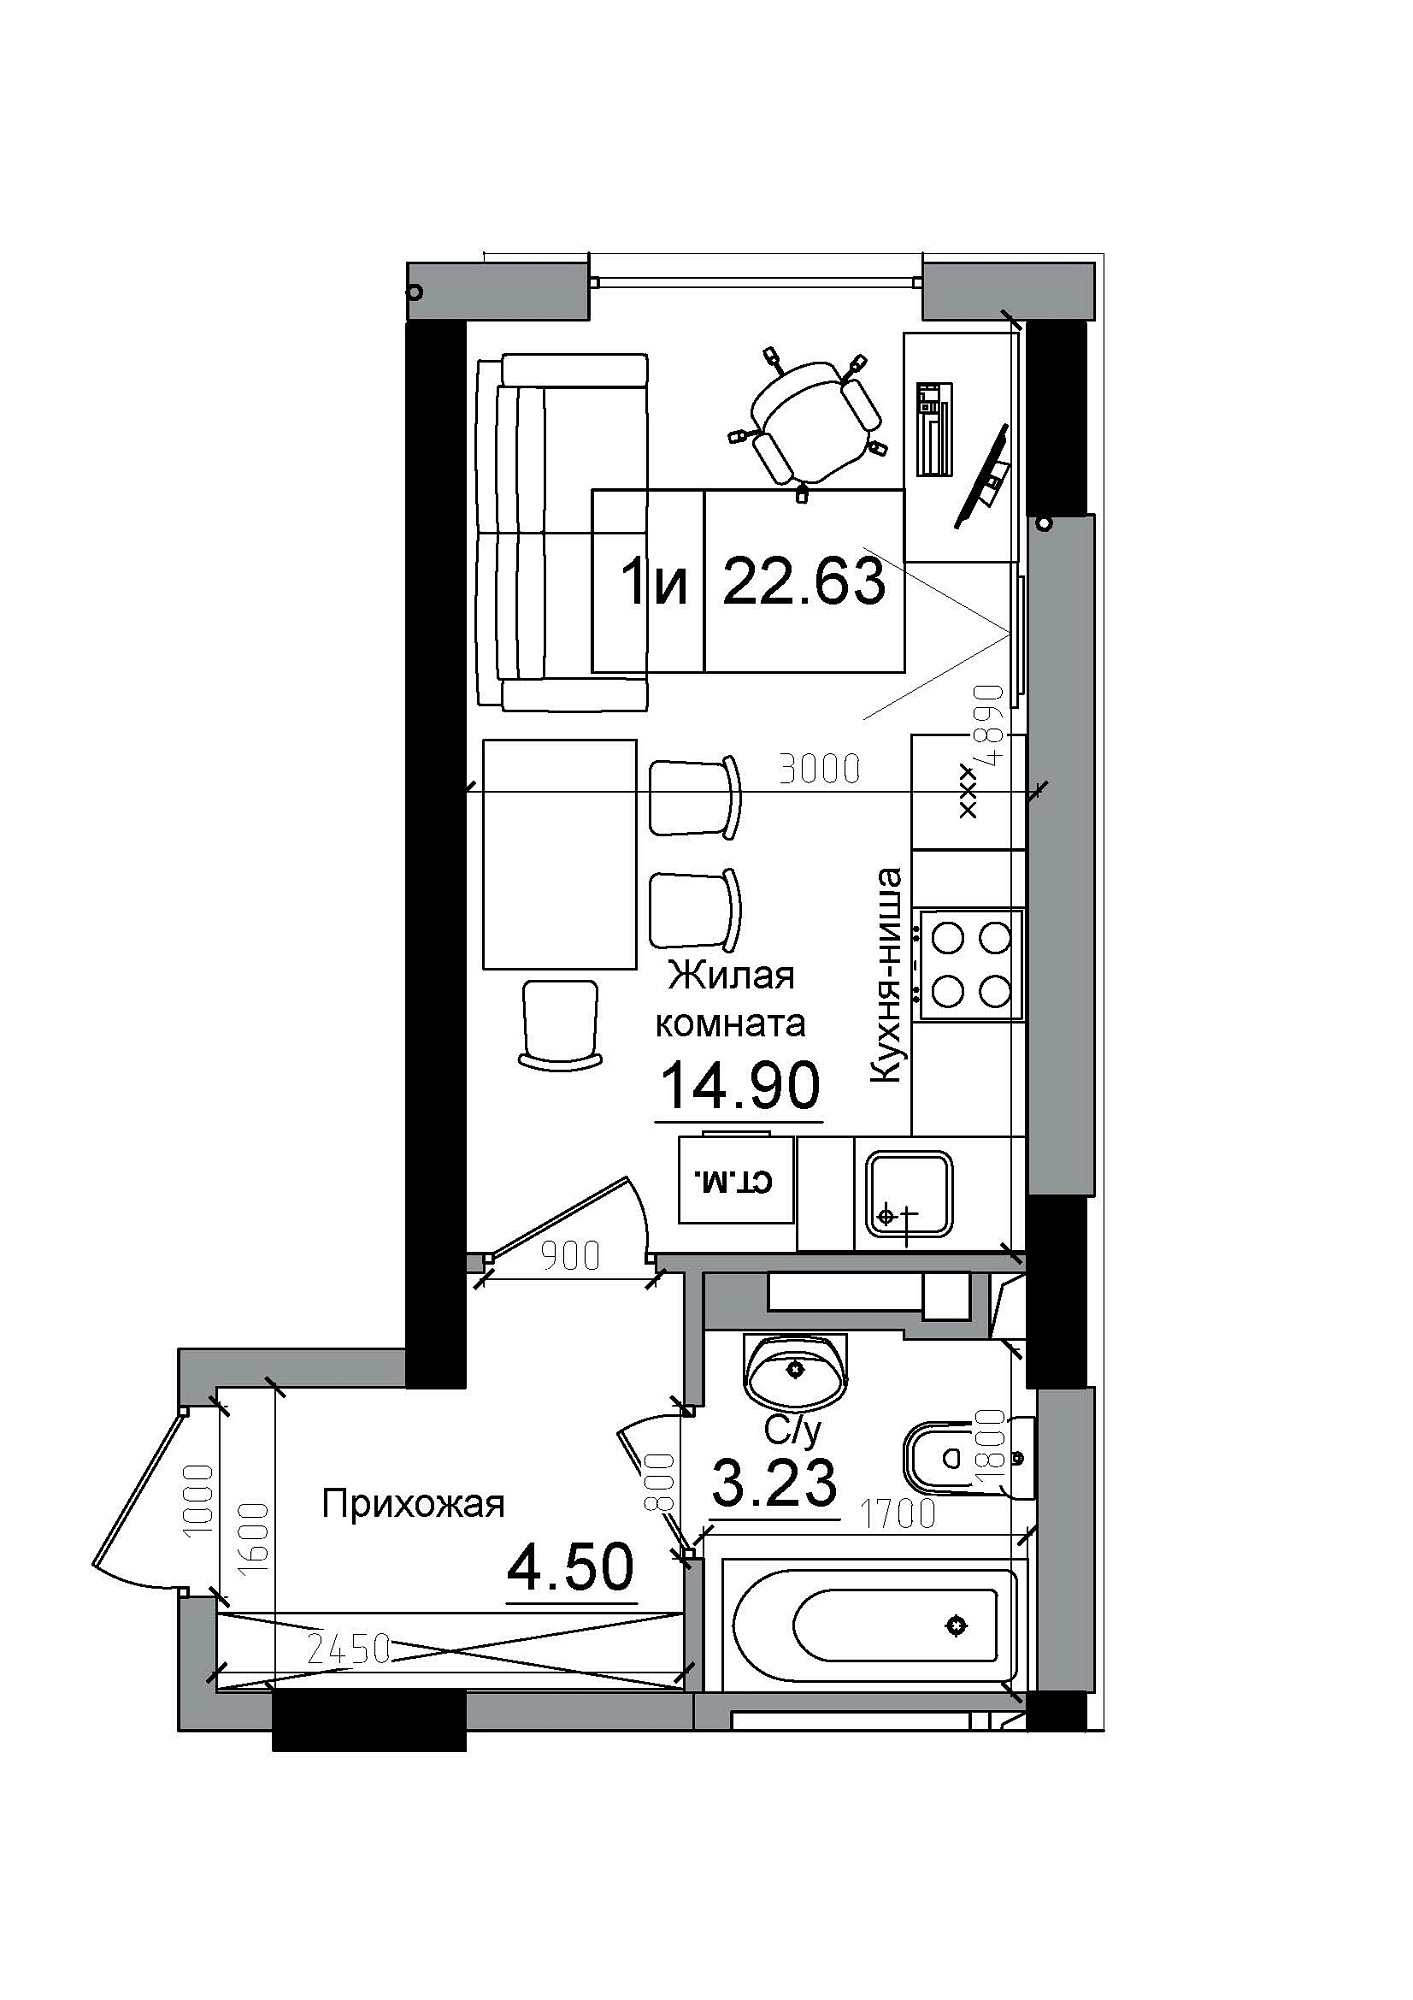 Планировка Smart-квартира площей 22.63м2, AB-12-08/00011.